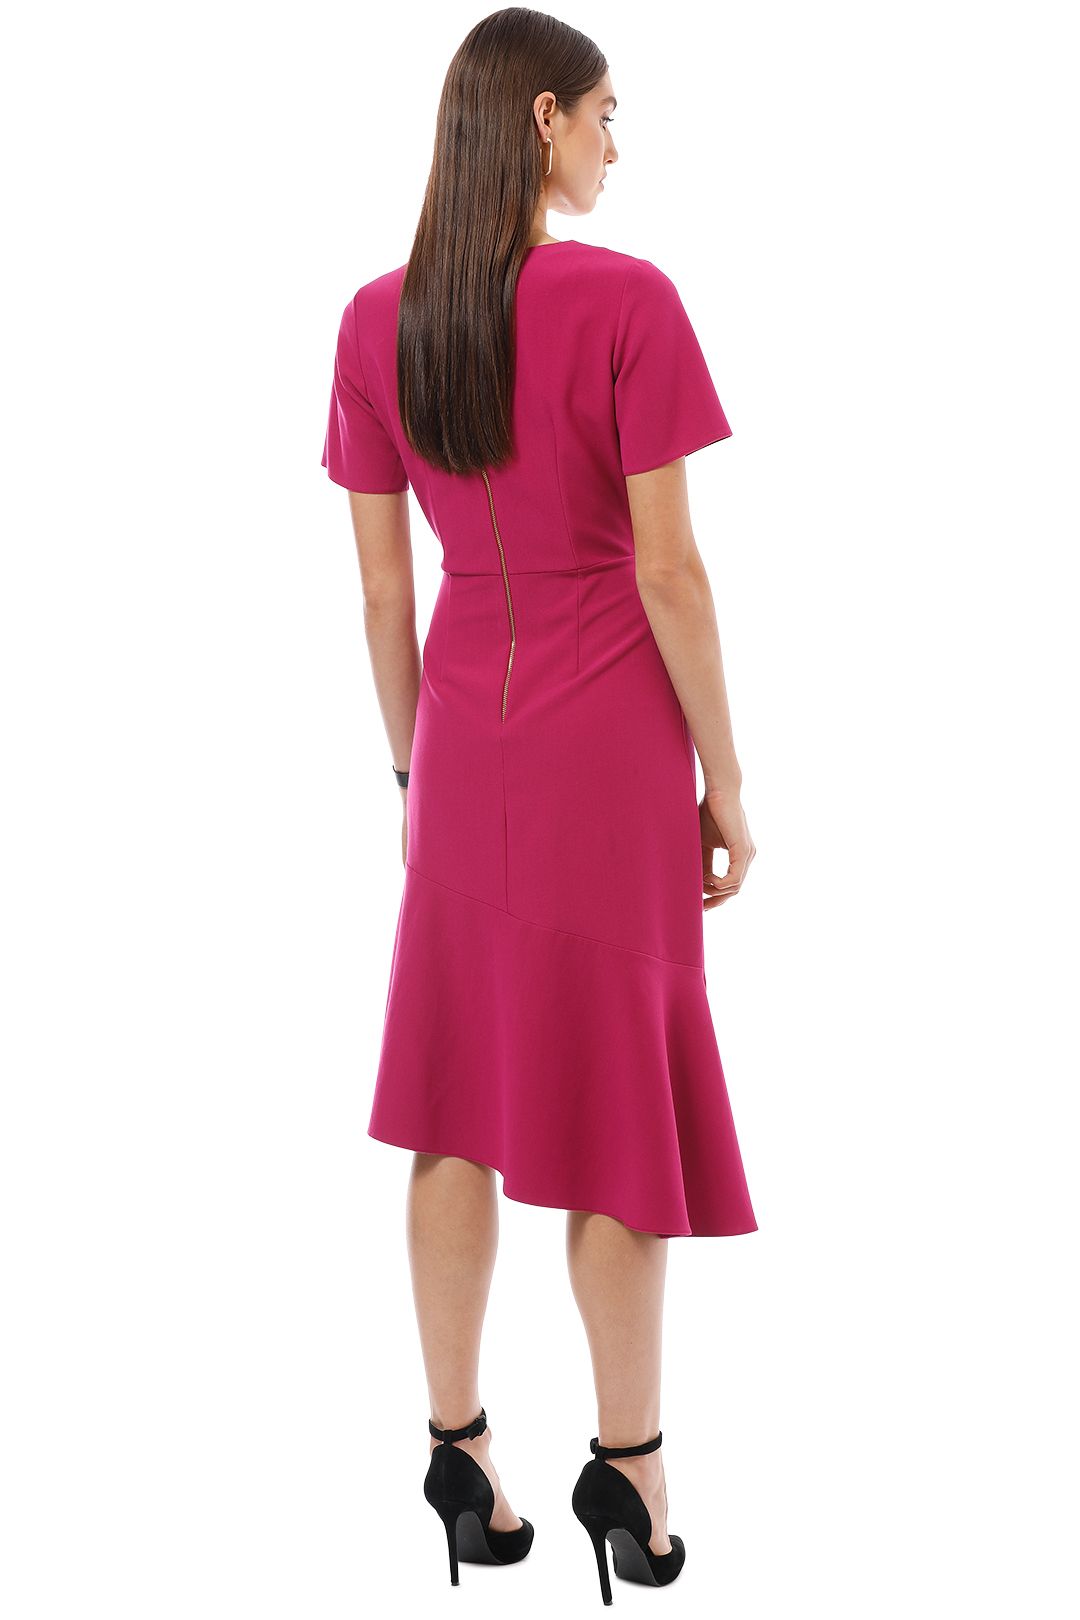 Closet London - Asymmetric Frill Dress - Pink - Back